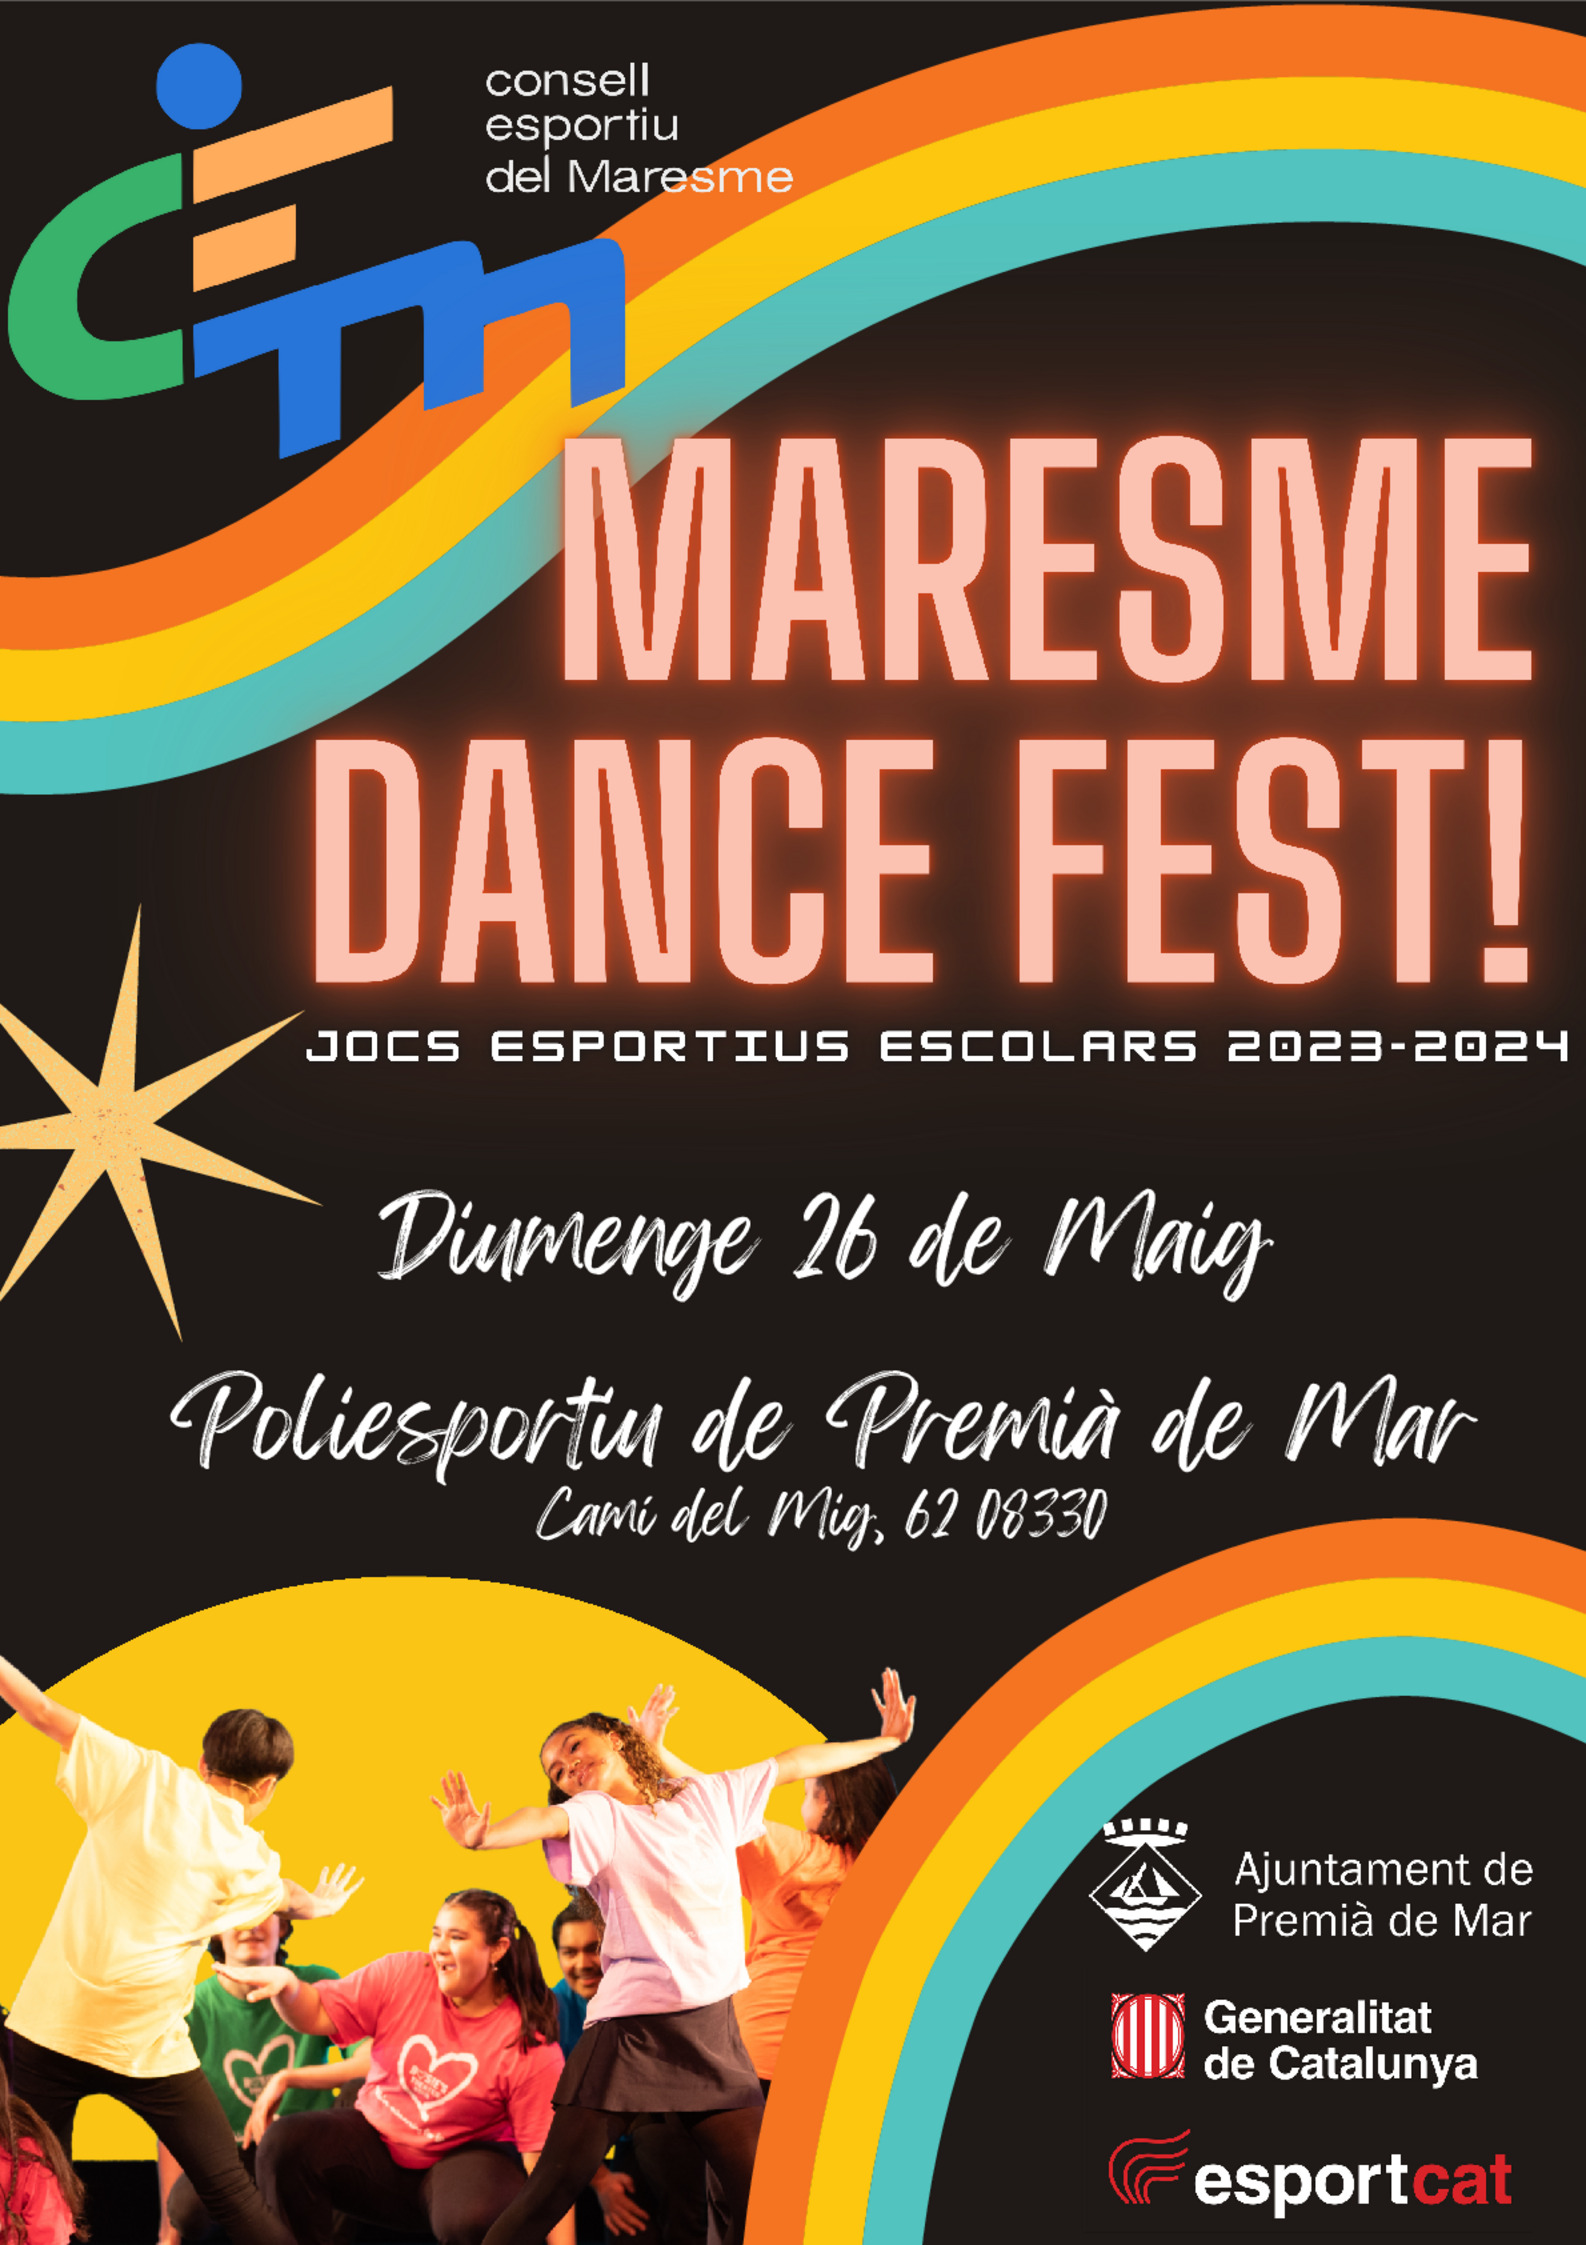 Maresme Dance Fest